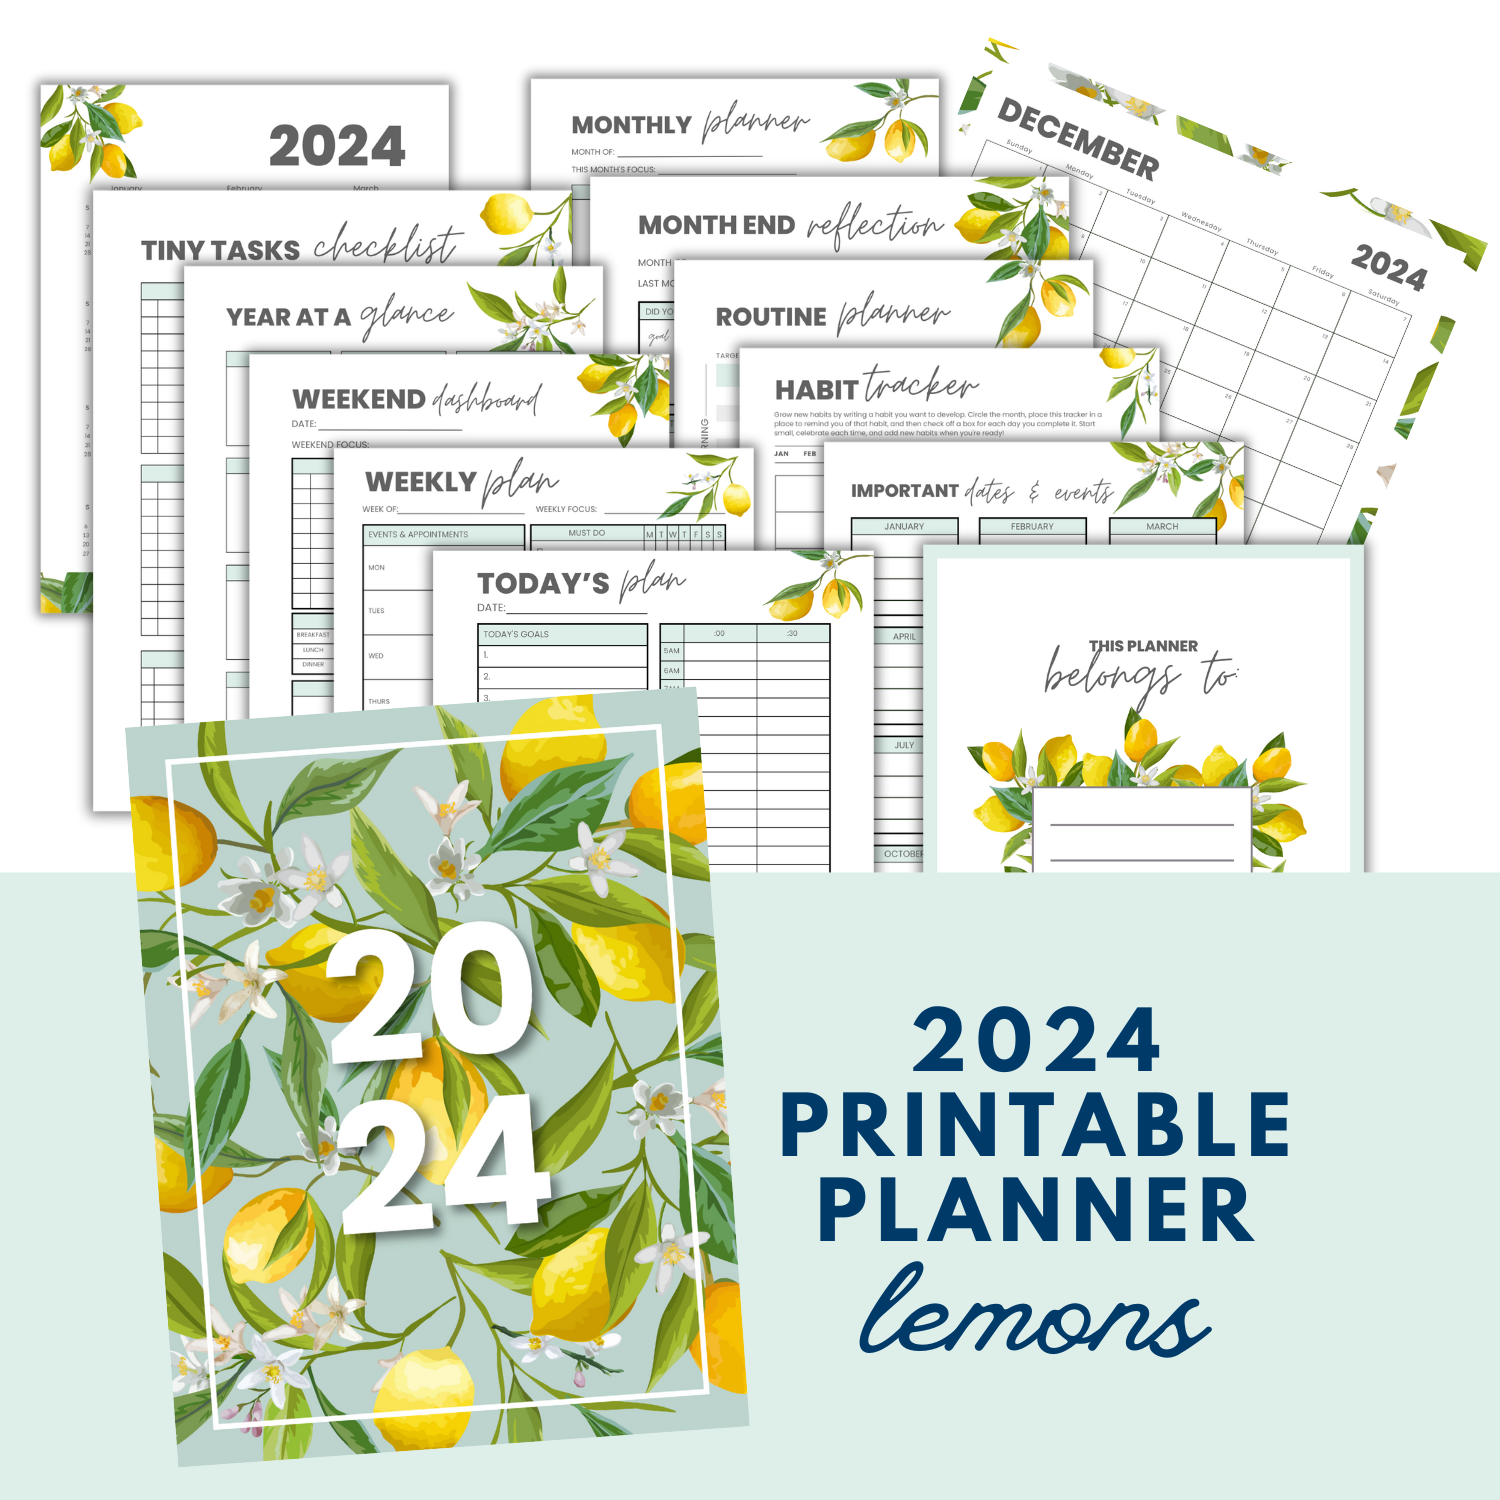 2024 Printable Planner (Lemons)